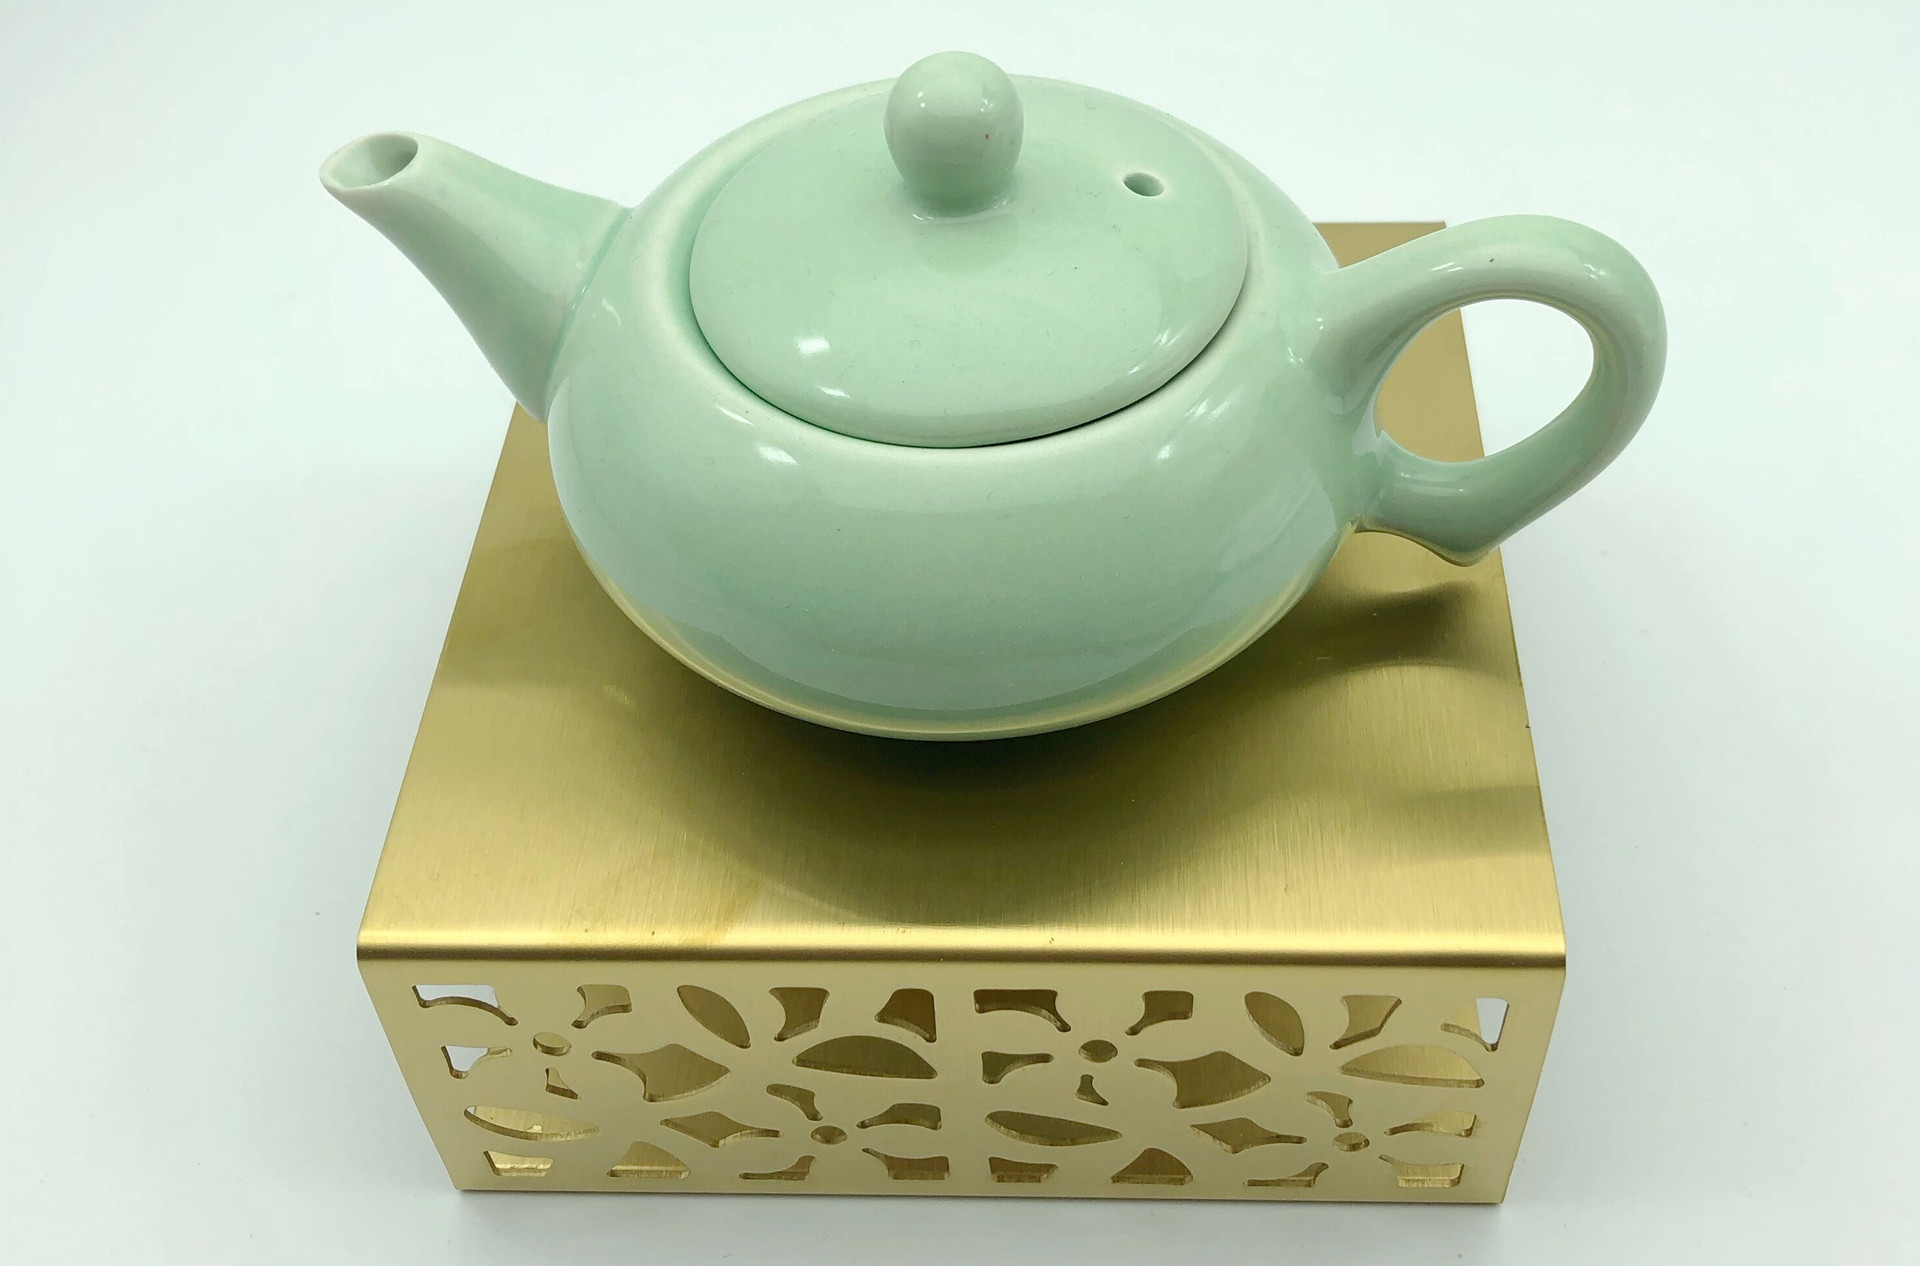 square metal tea coffee heater light holder coffee mug glass cup teapot tea pot oil wax candle stainless steel tea warmer